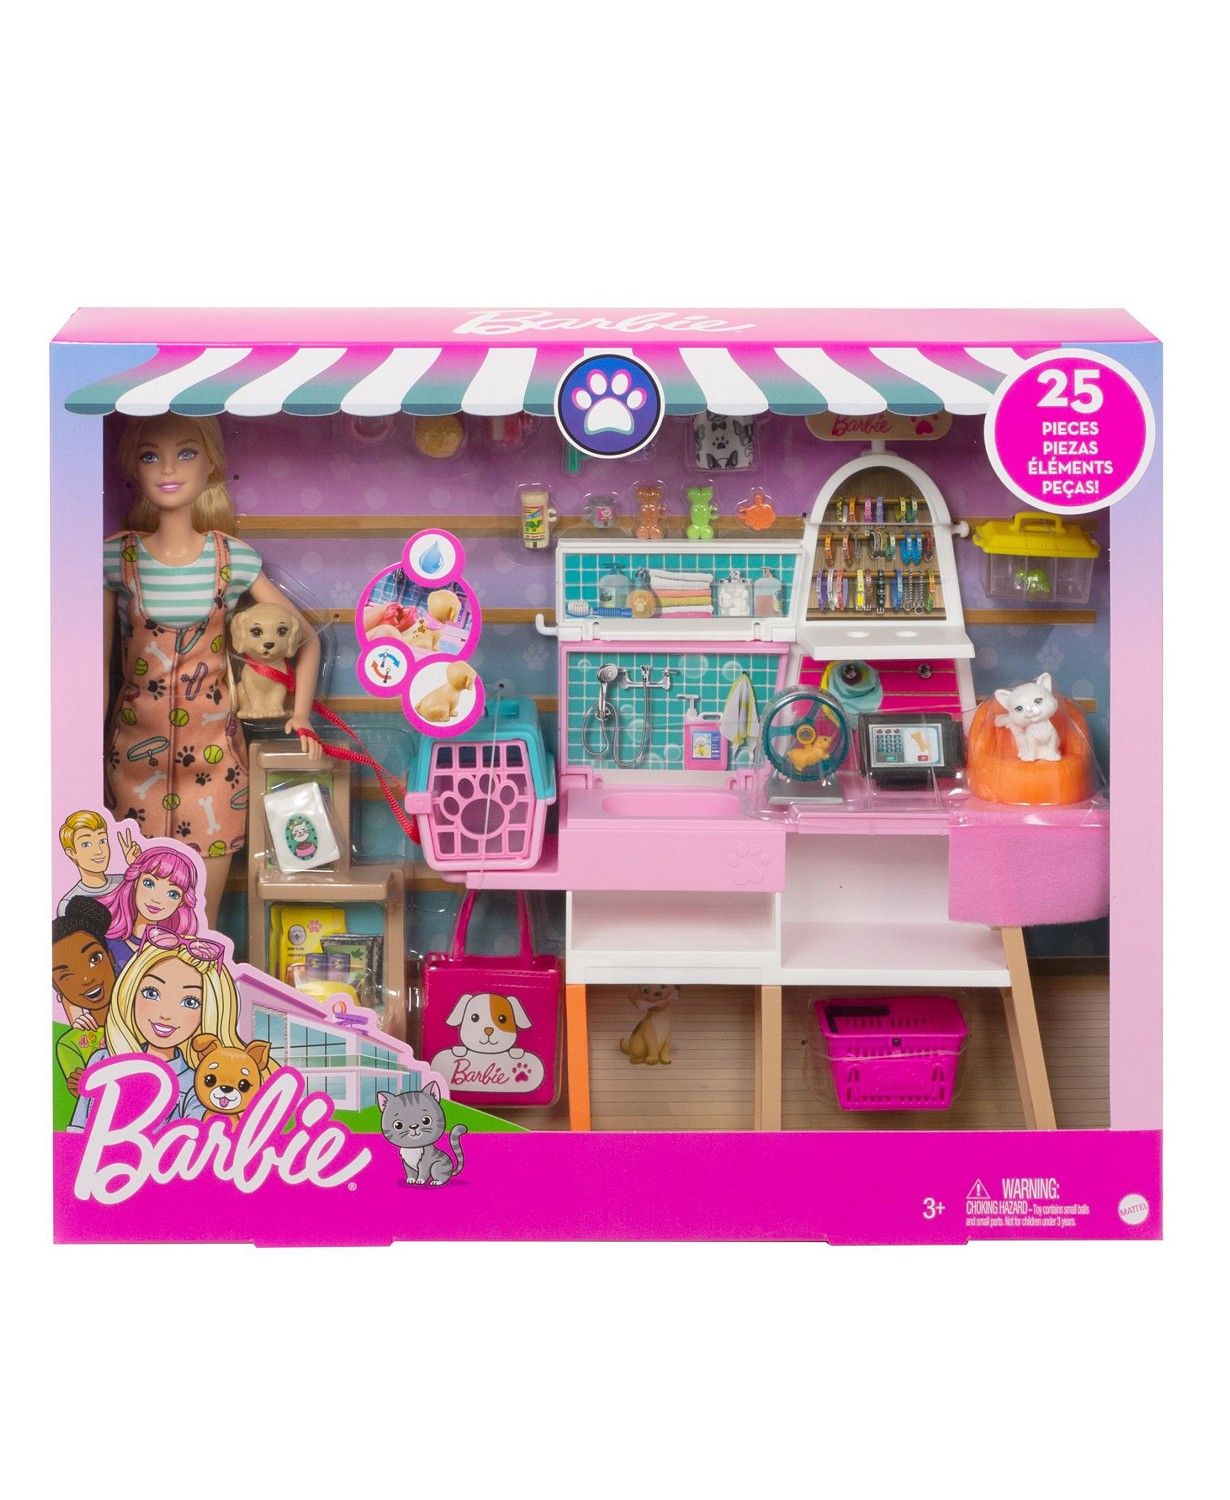 Barbie Doll and Play set & Reviews - Home - Macy's | Macys (US)